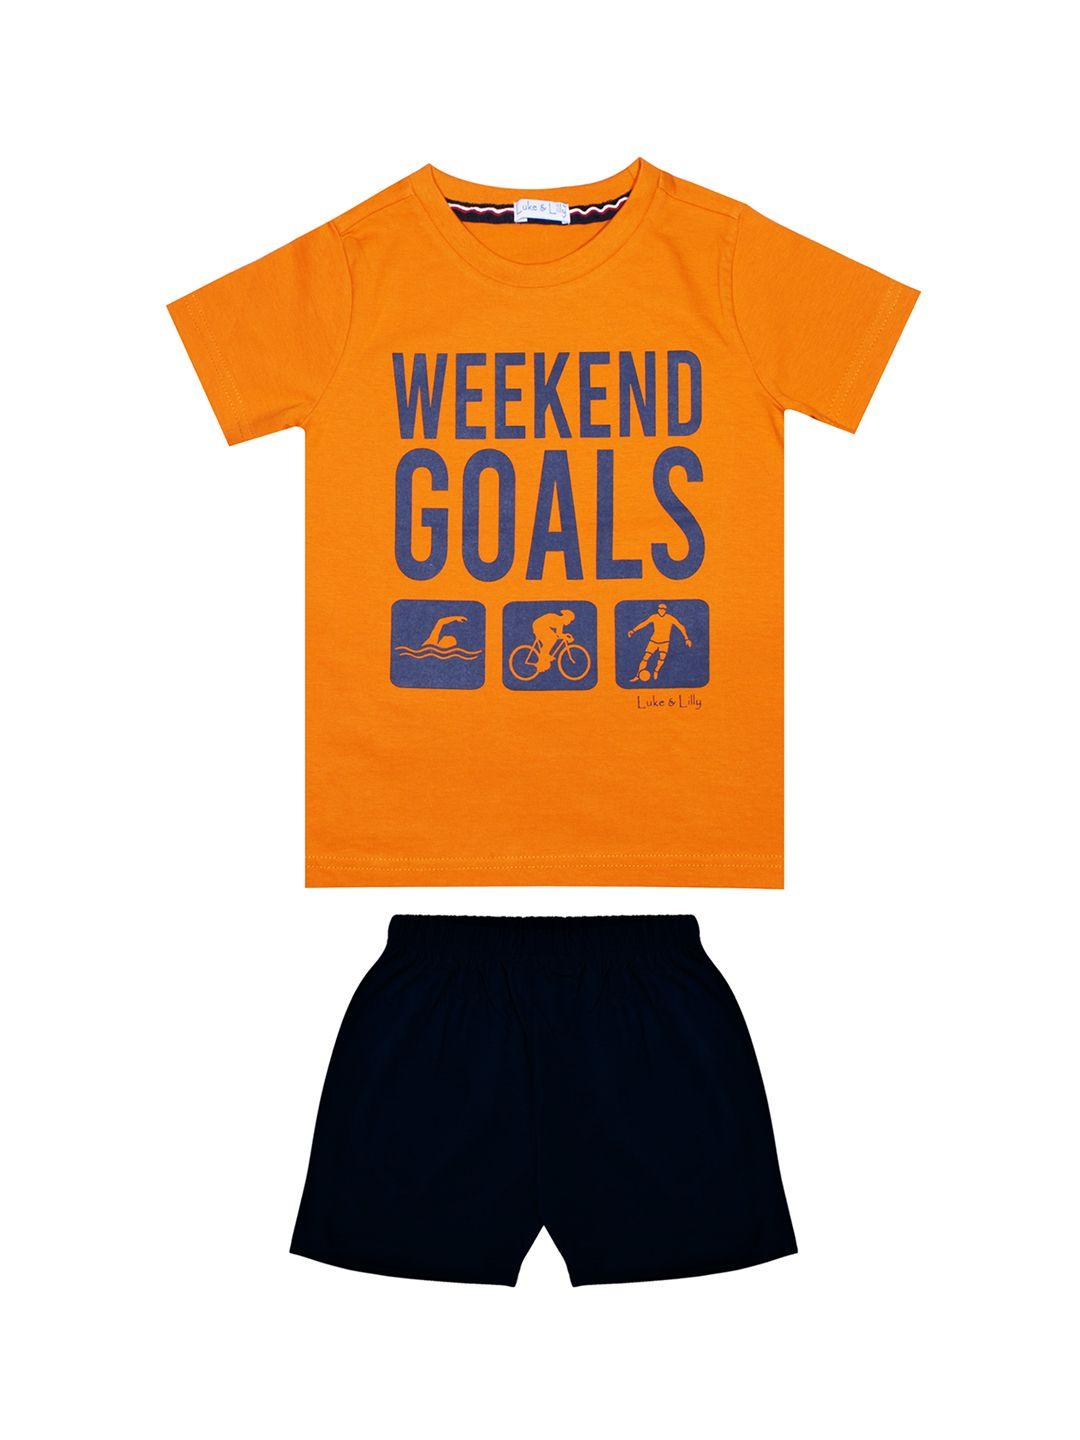 luke & lilly boys orange & black printed clothing set